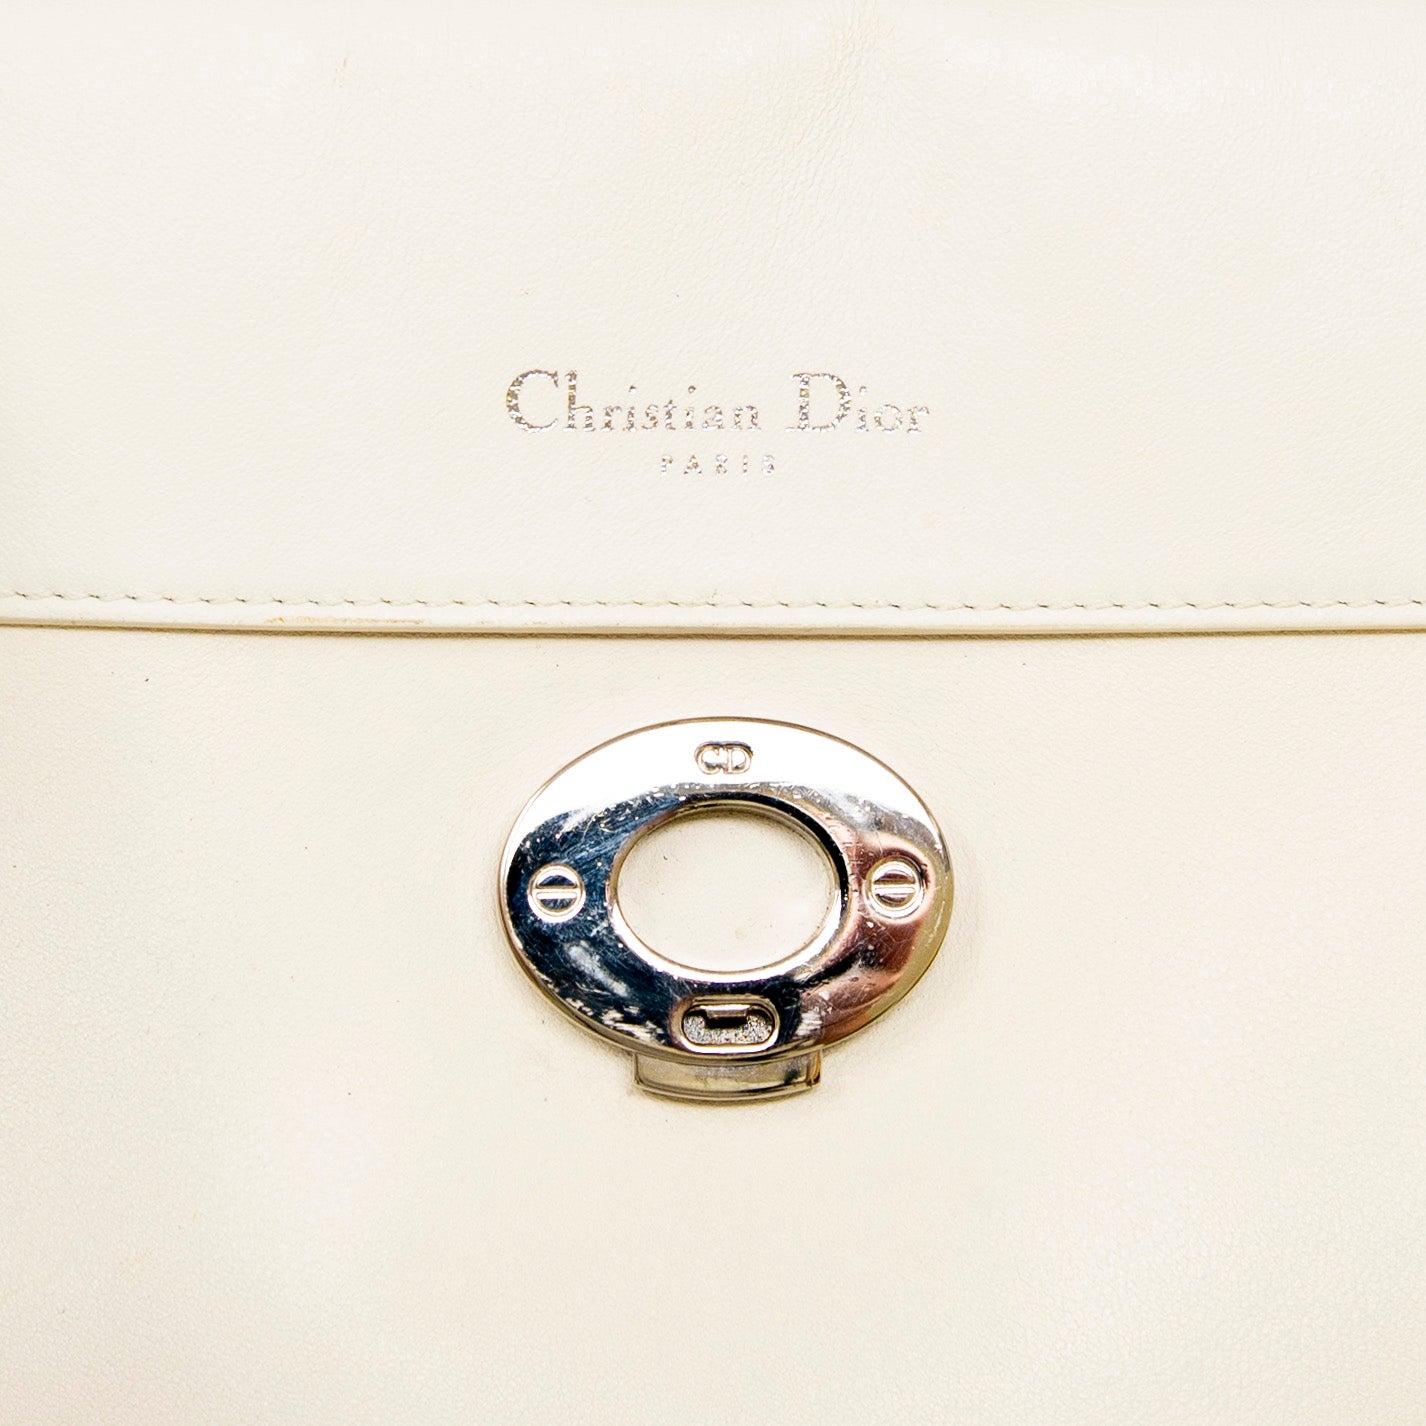 Dior White Calfskin Be Dior Bag